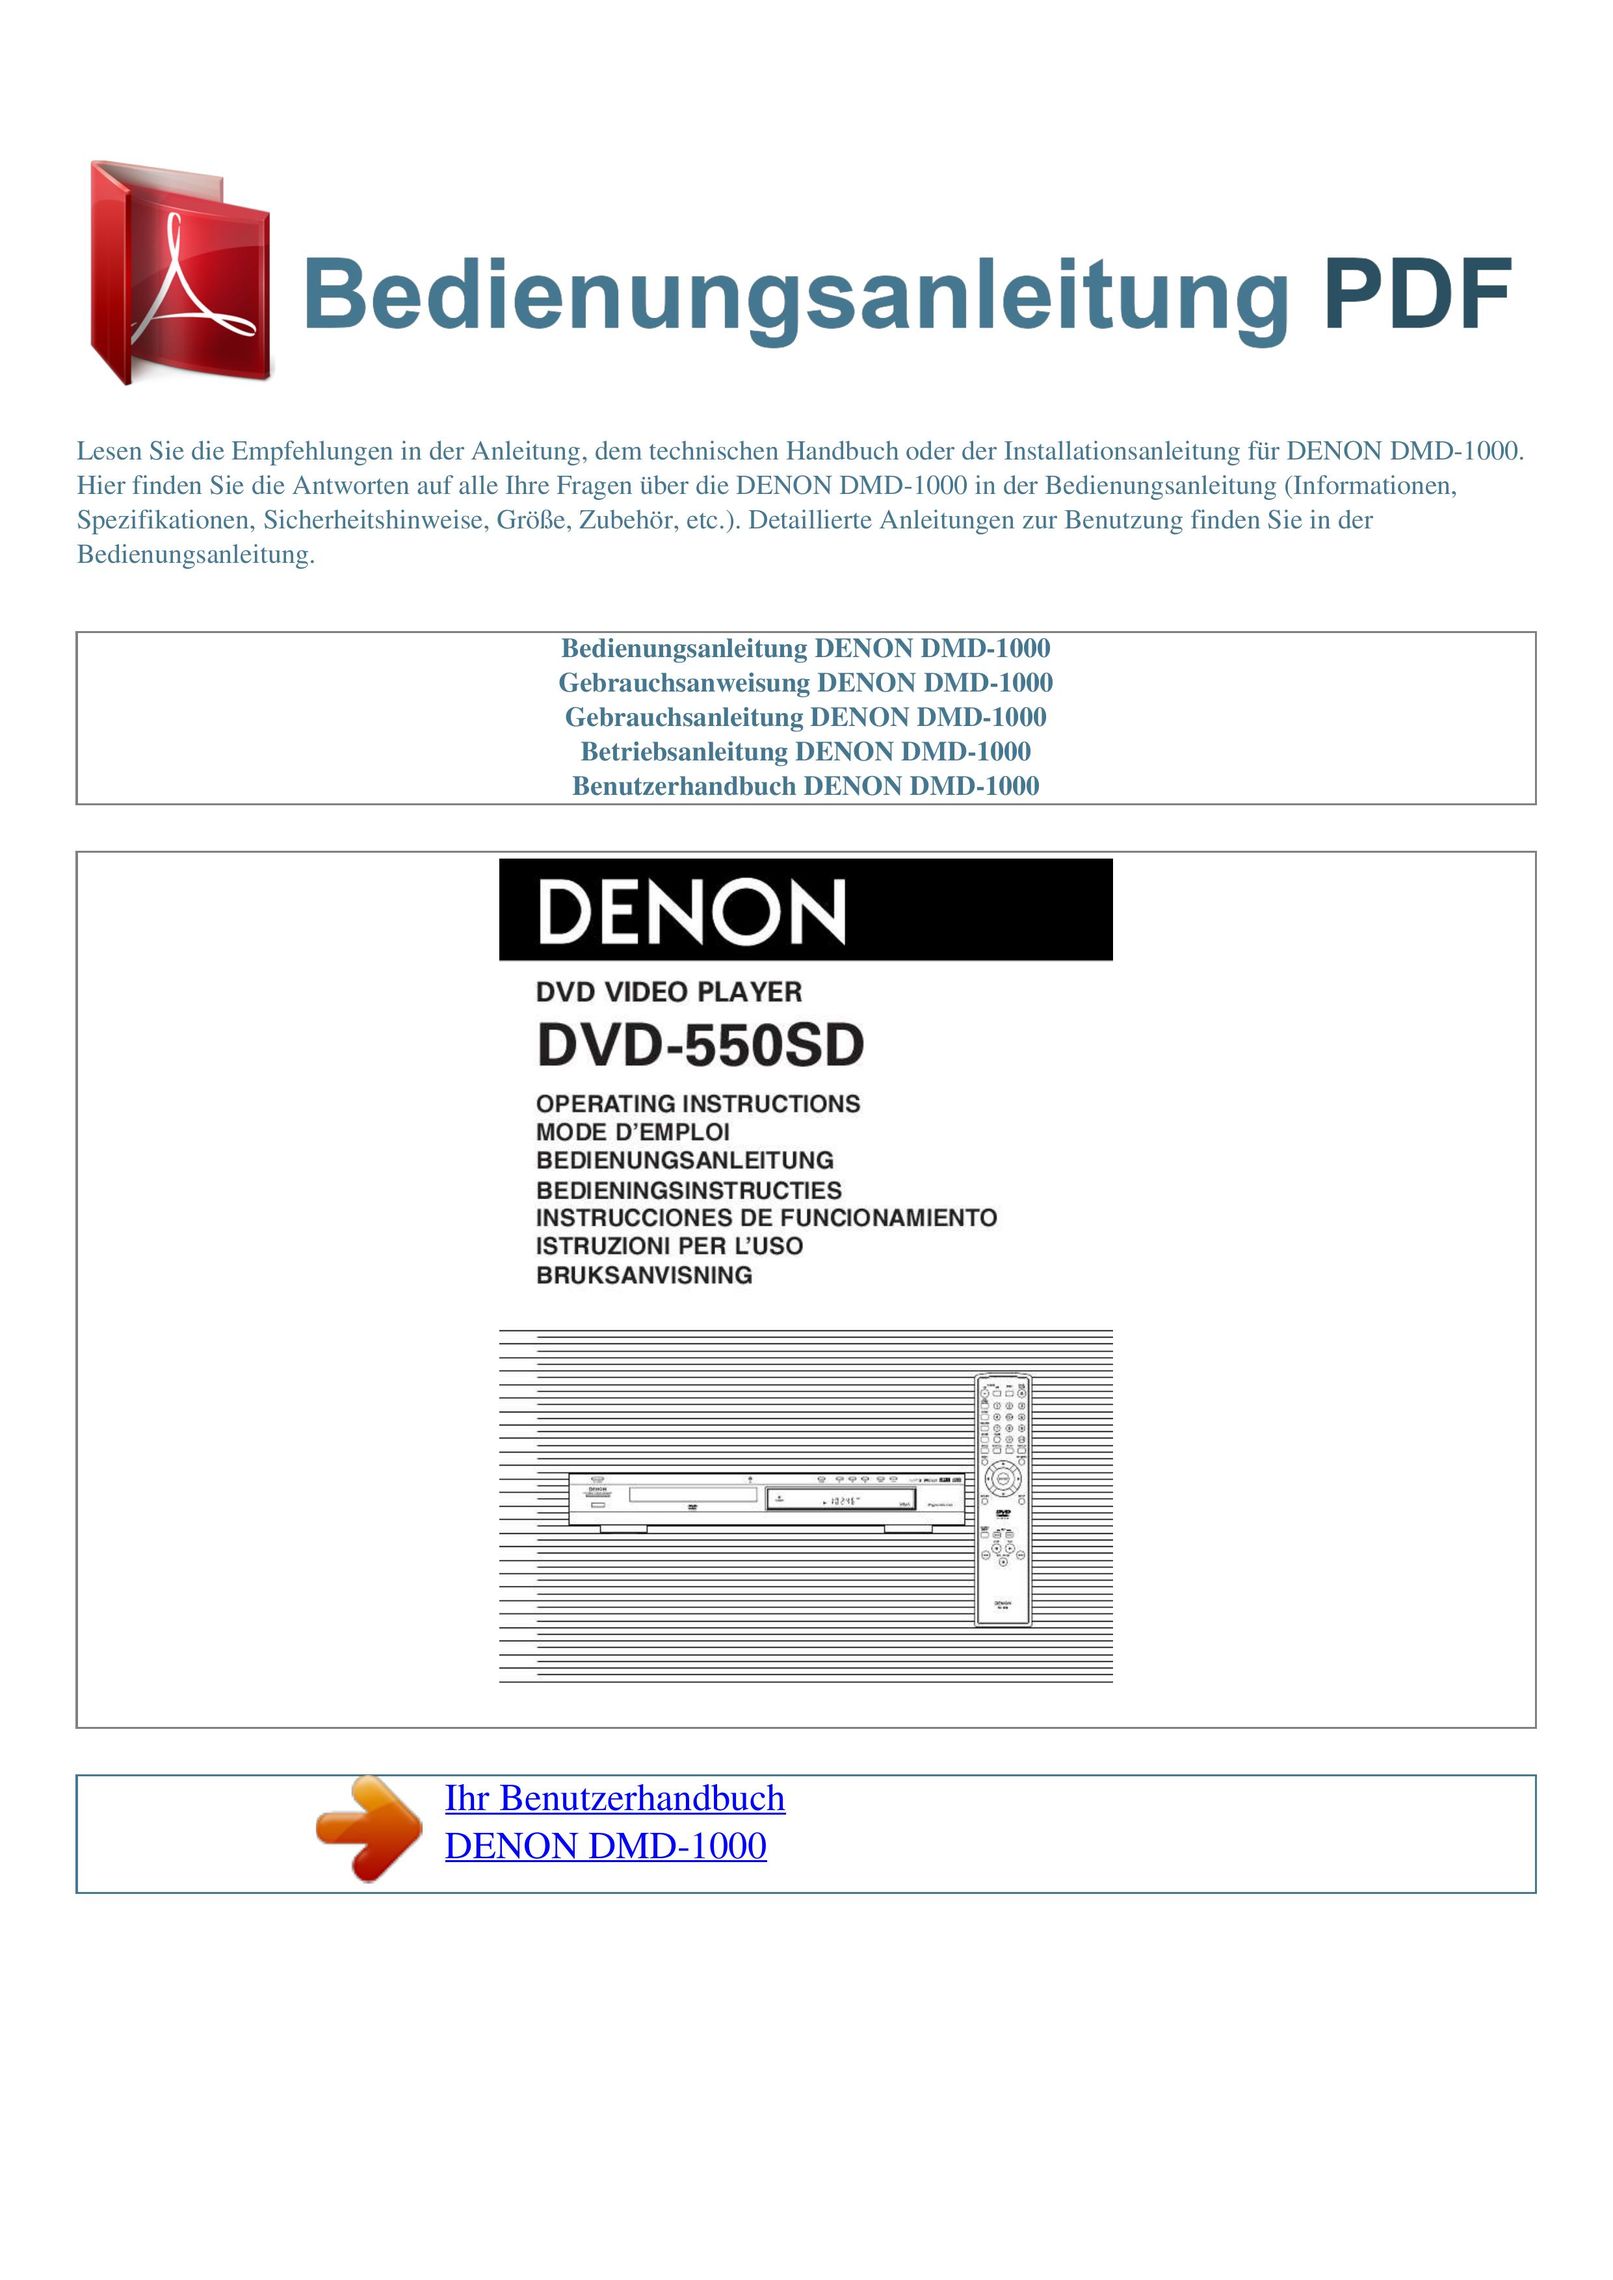 Denon DMD-1000 DVD Player User Manual